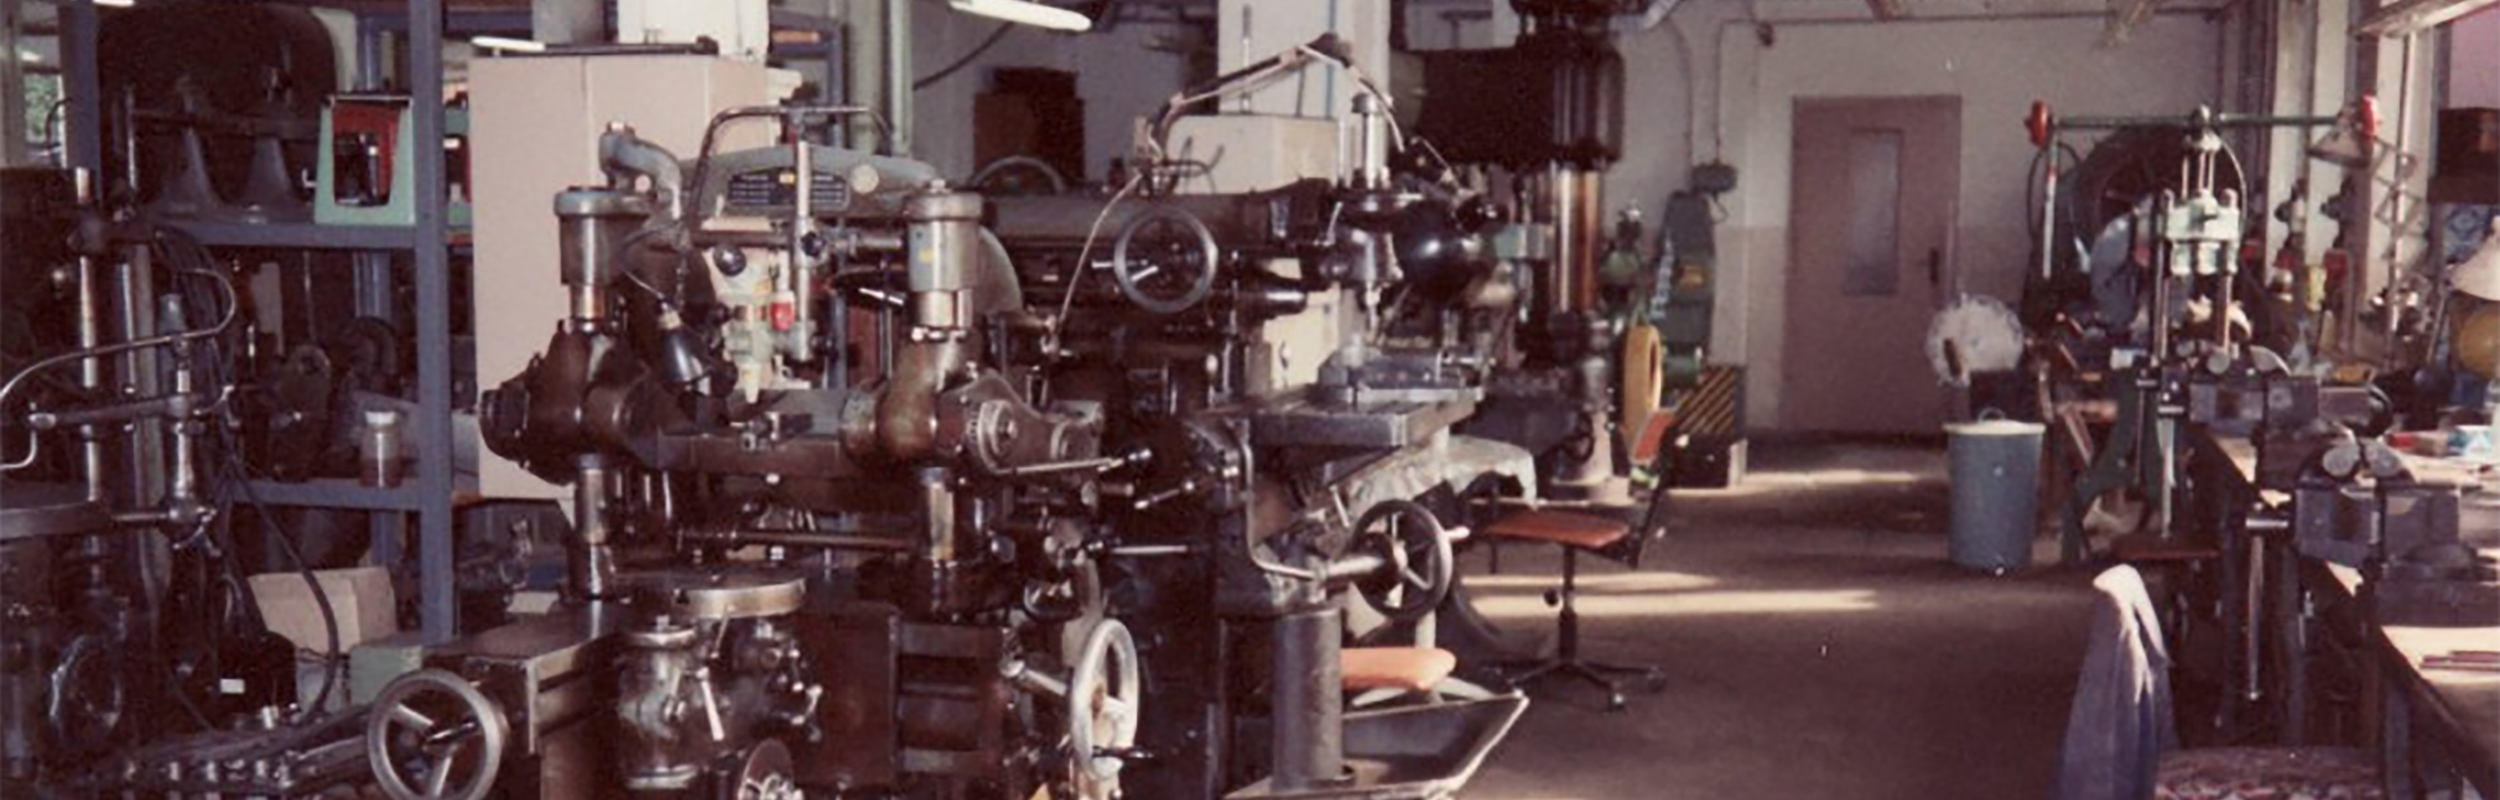 Maschinenpark um 1990